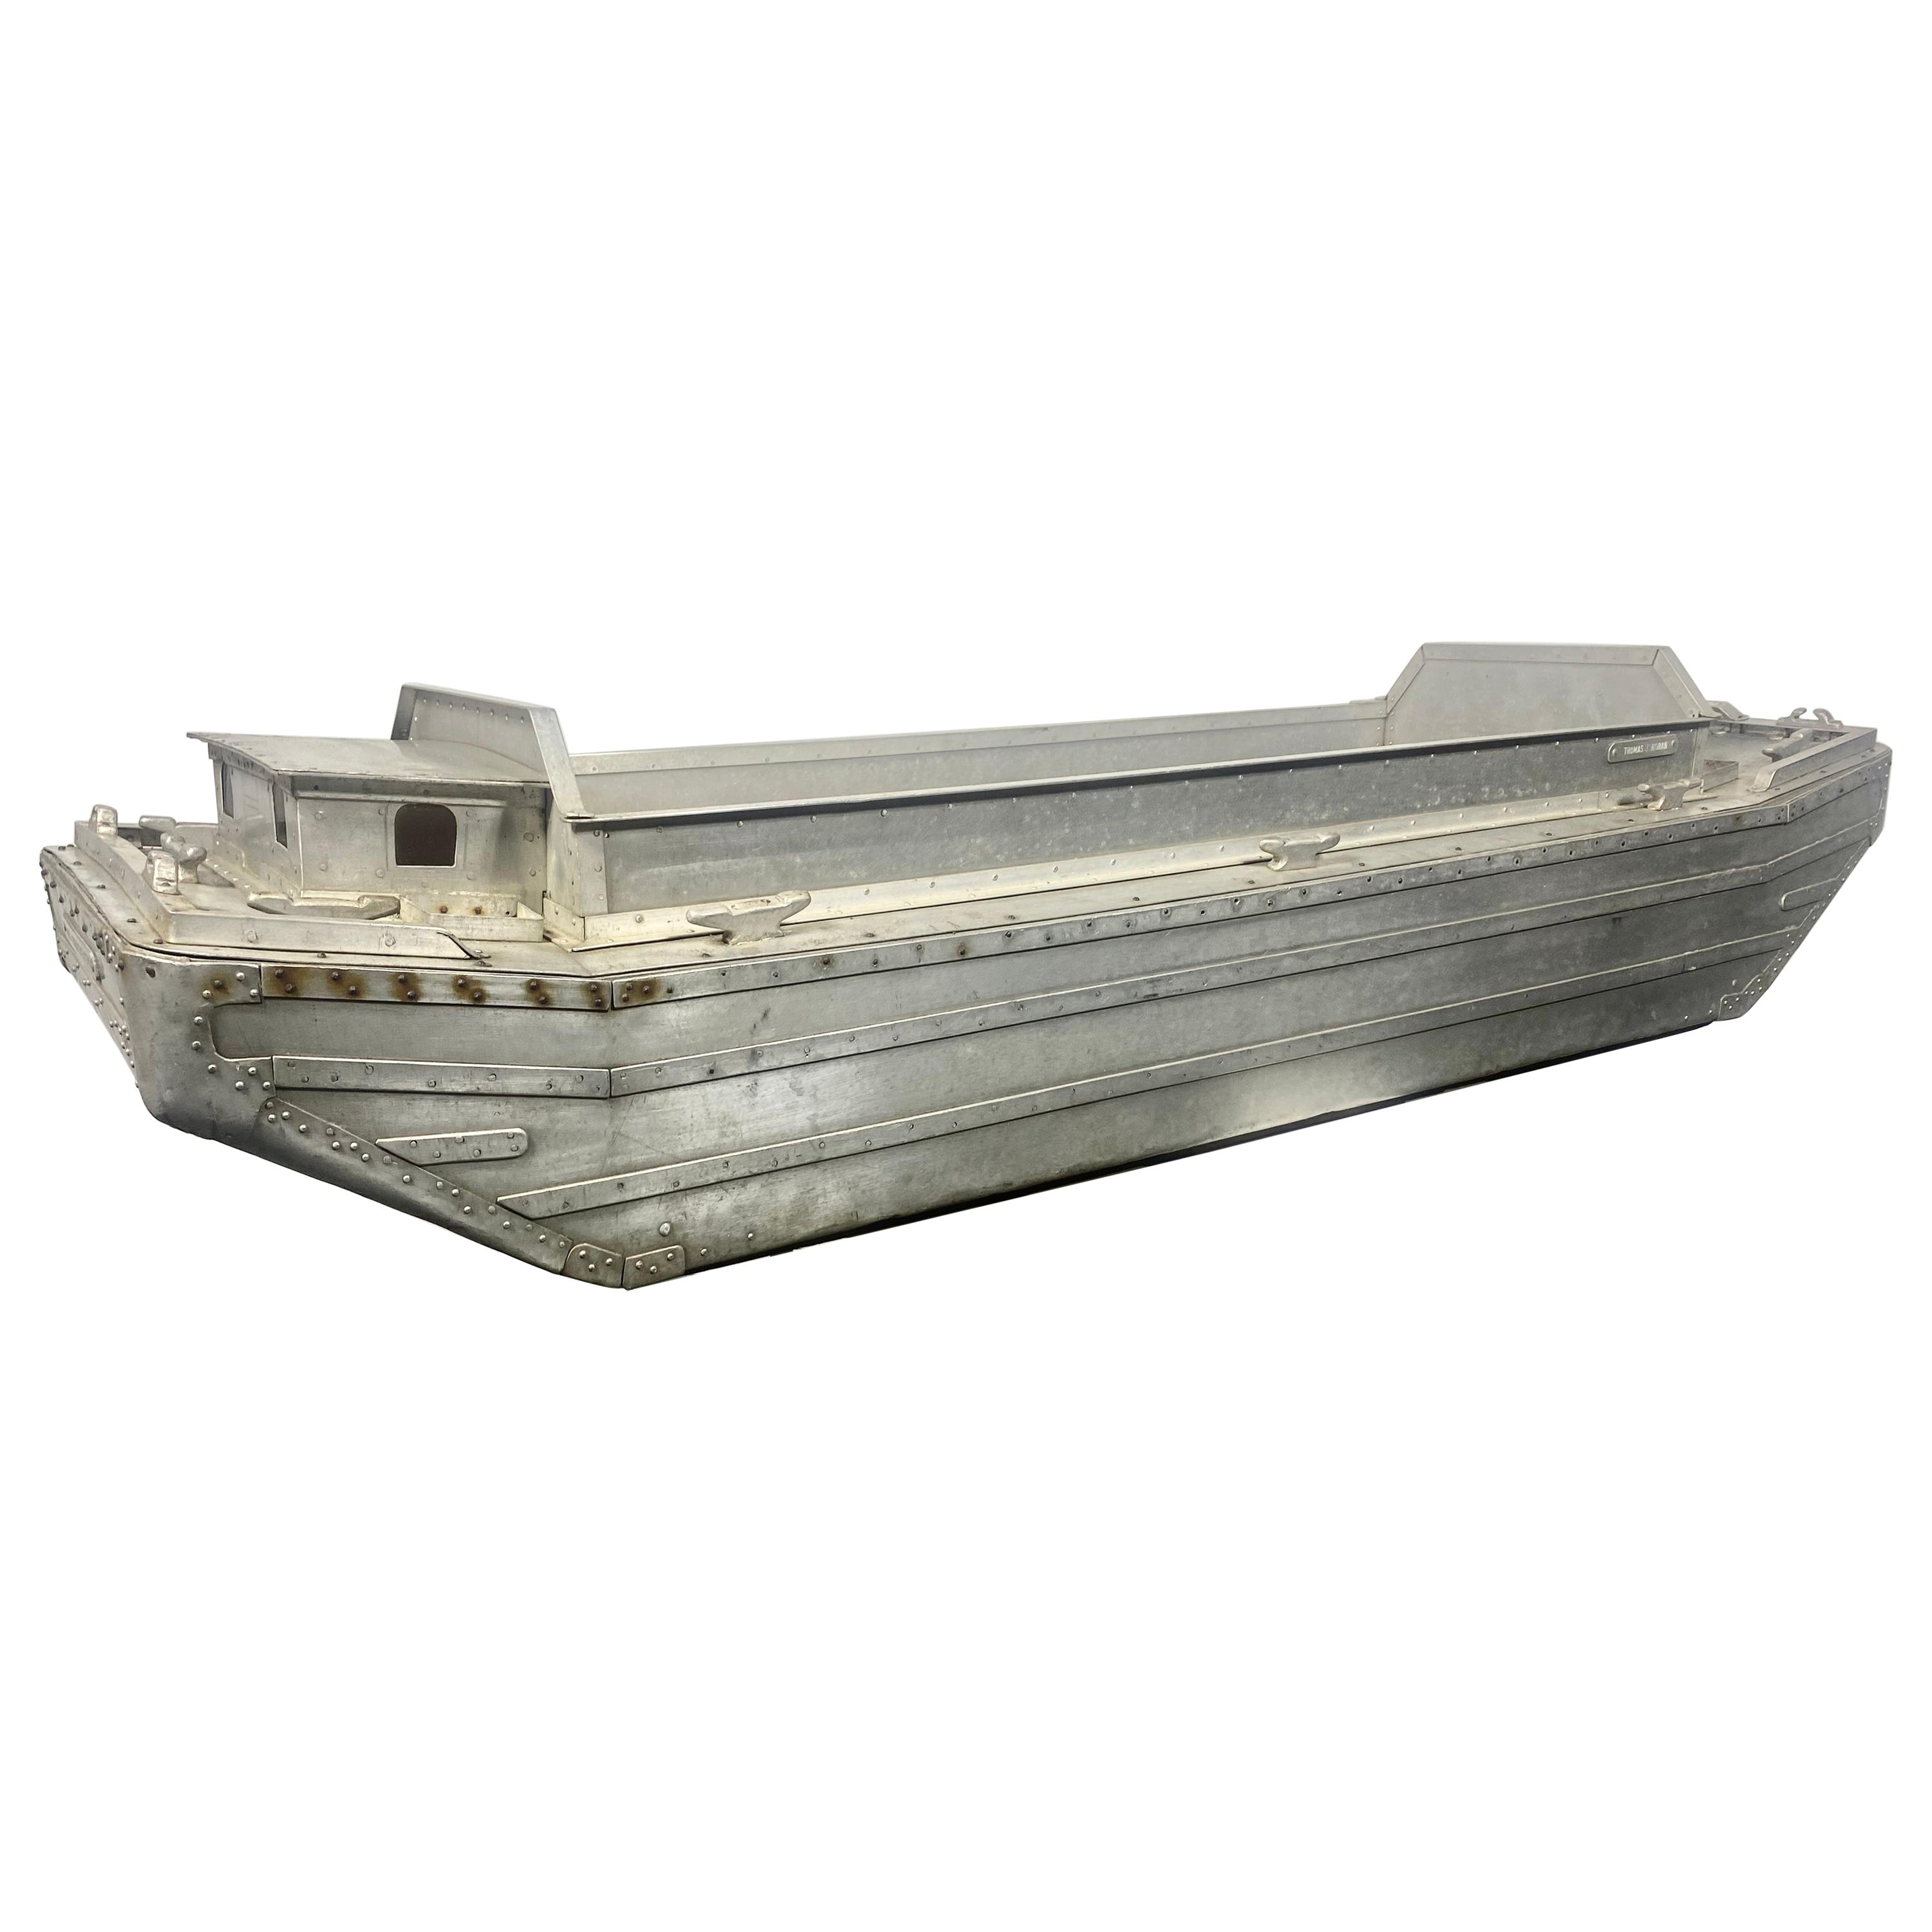 Large 48" Aluminum Hand Made Art Deco Barge (boat) signed Thomas Horan New York